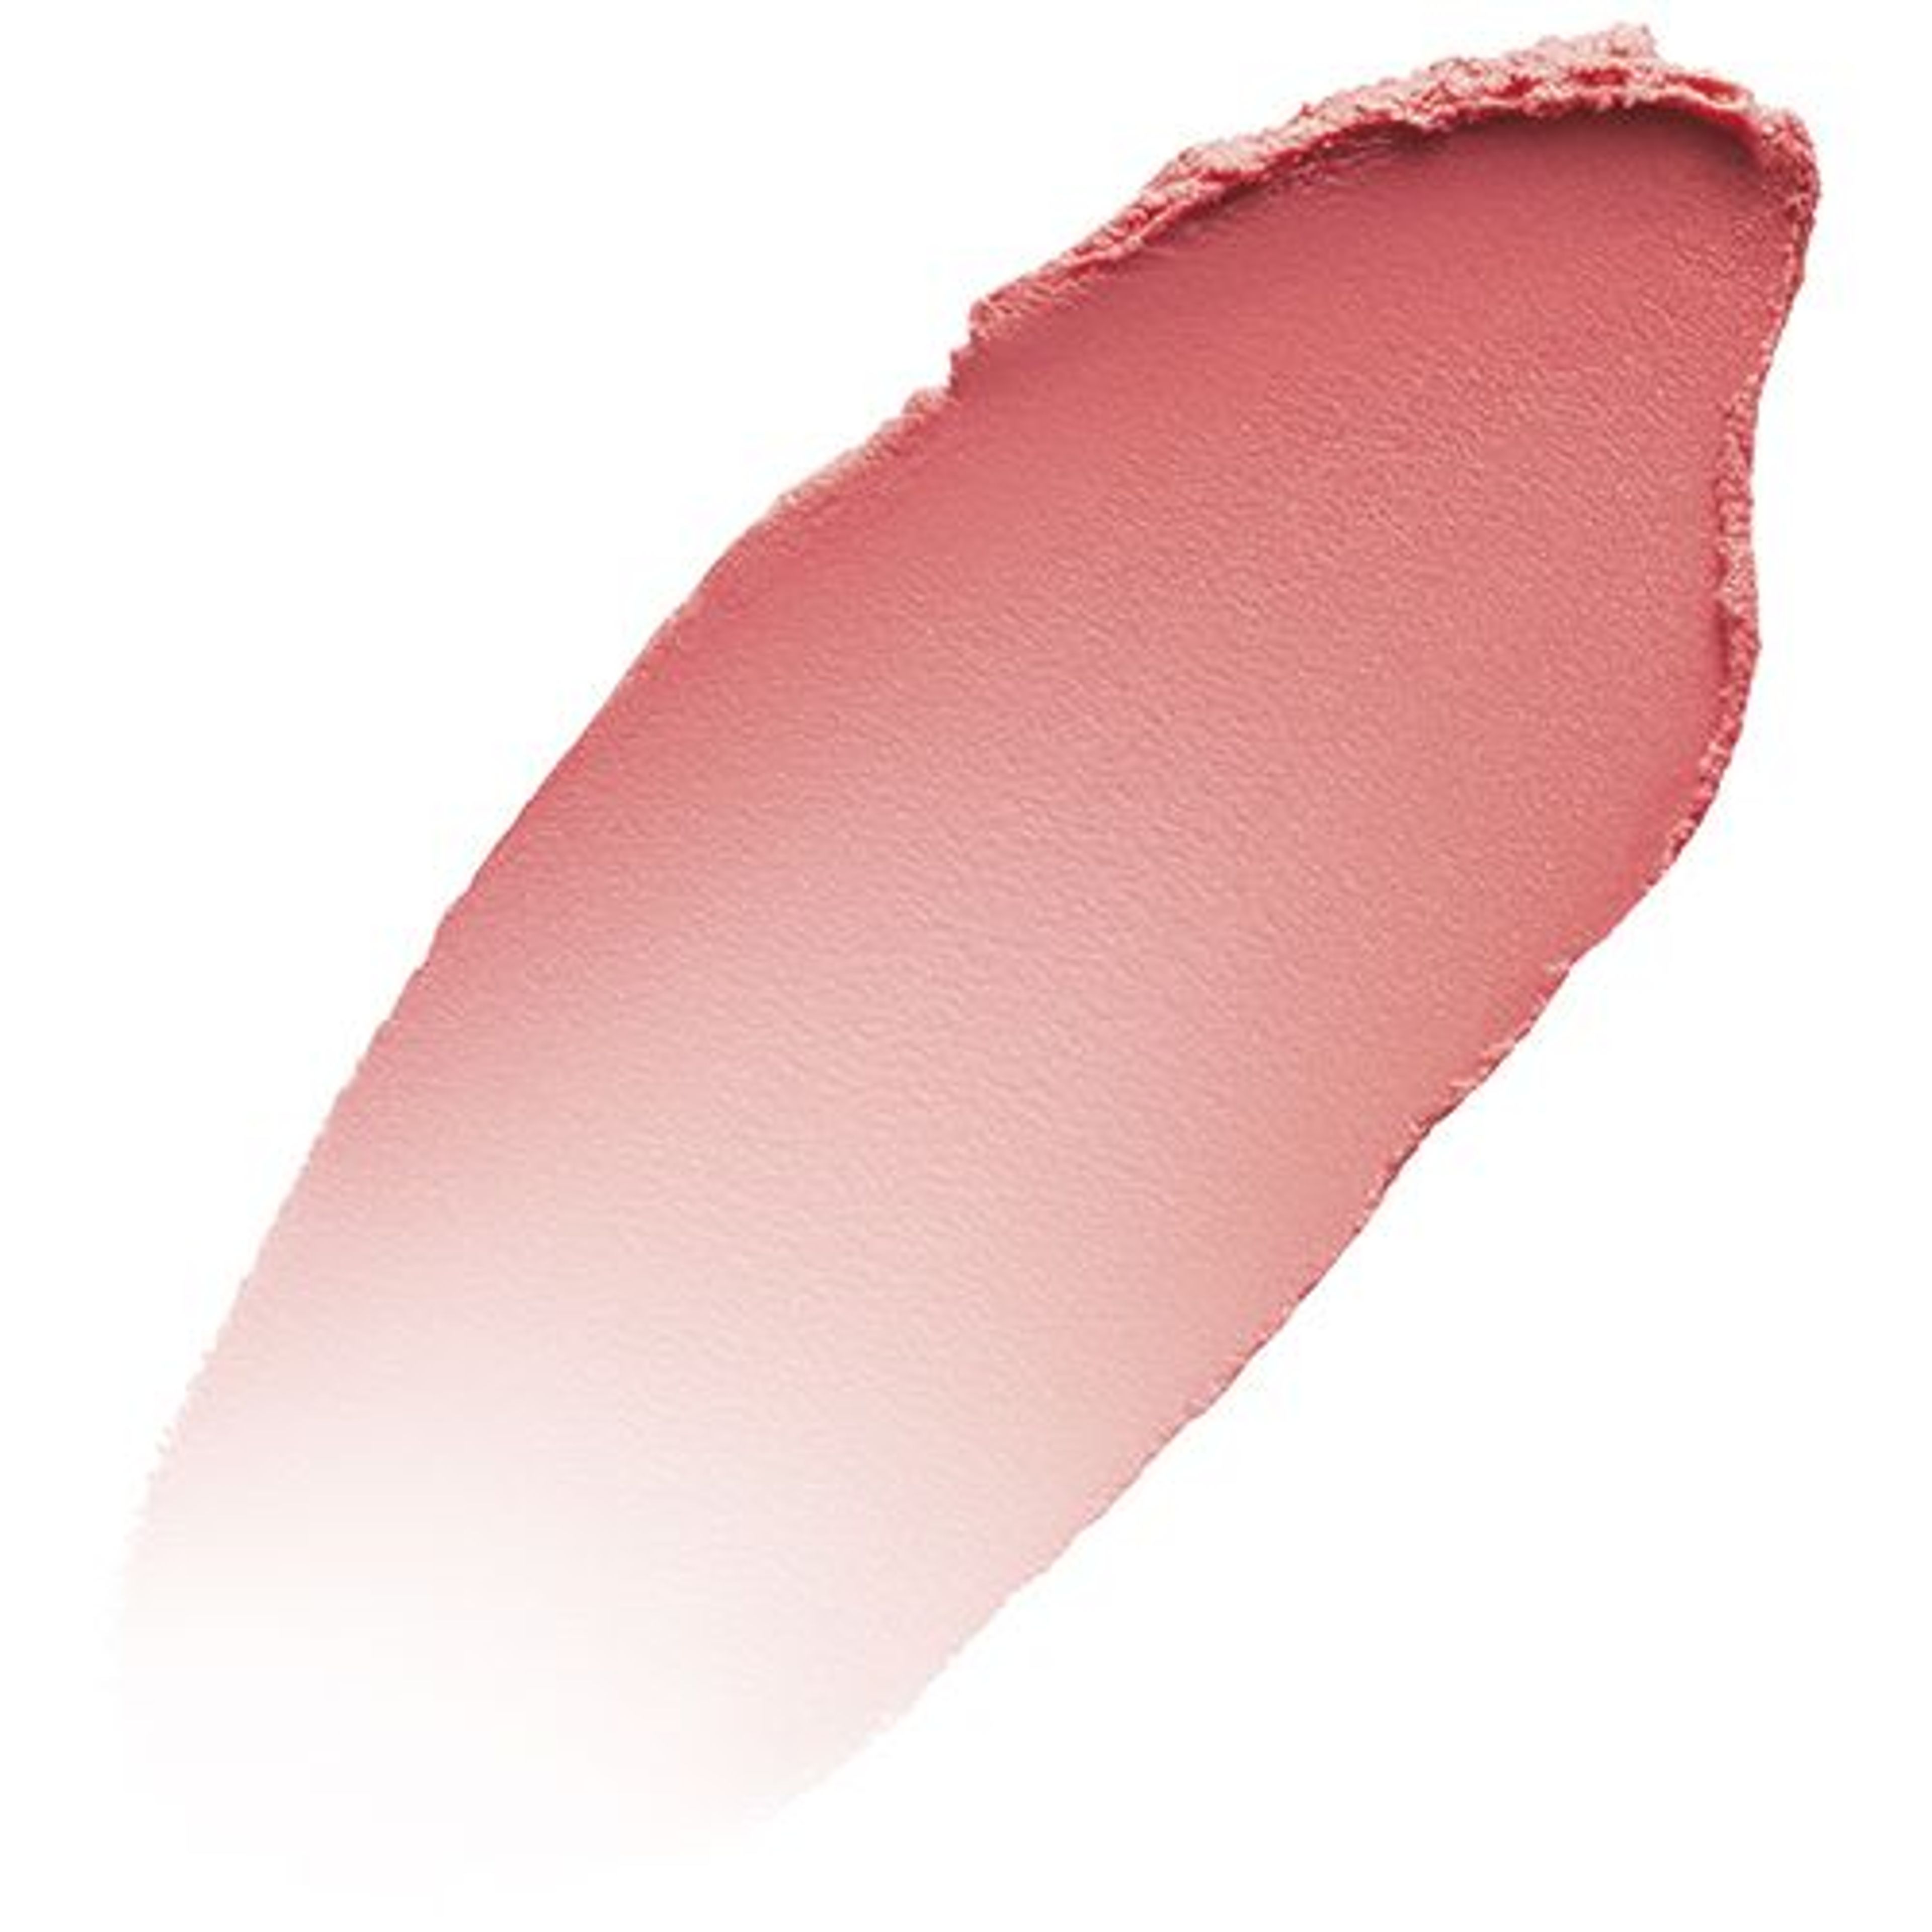 Shiseido Minimalist Whippedpowder Blush 3